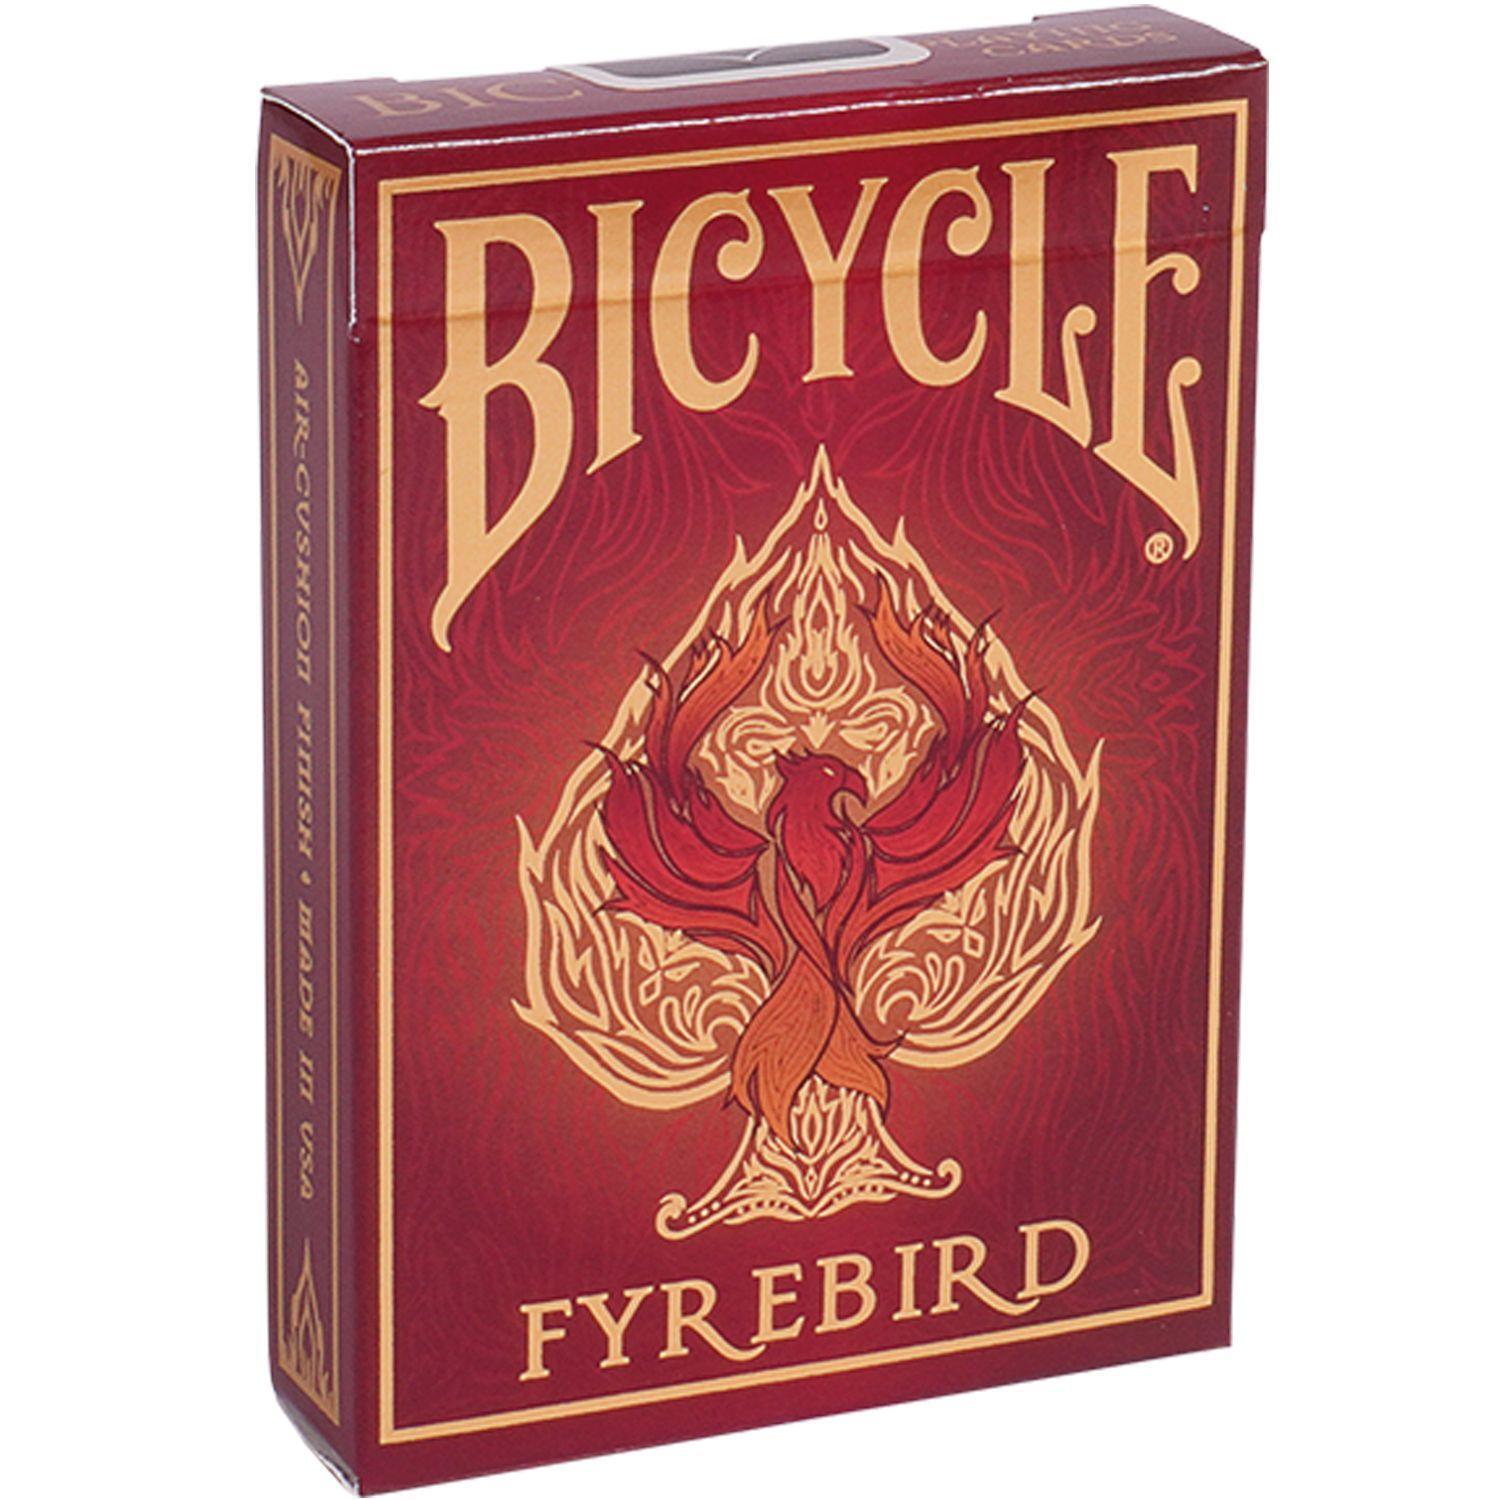 Bild: 73854093610 | Bicycle Fyrebird | United States Playing Card Company | Spiel | 2021